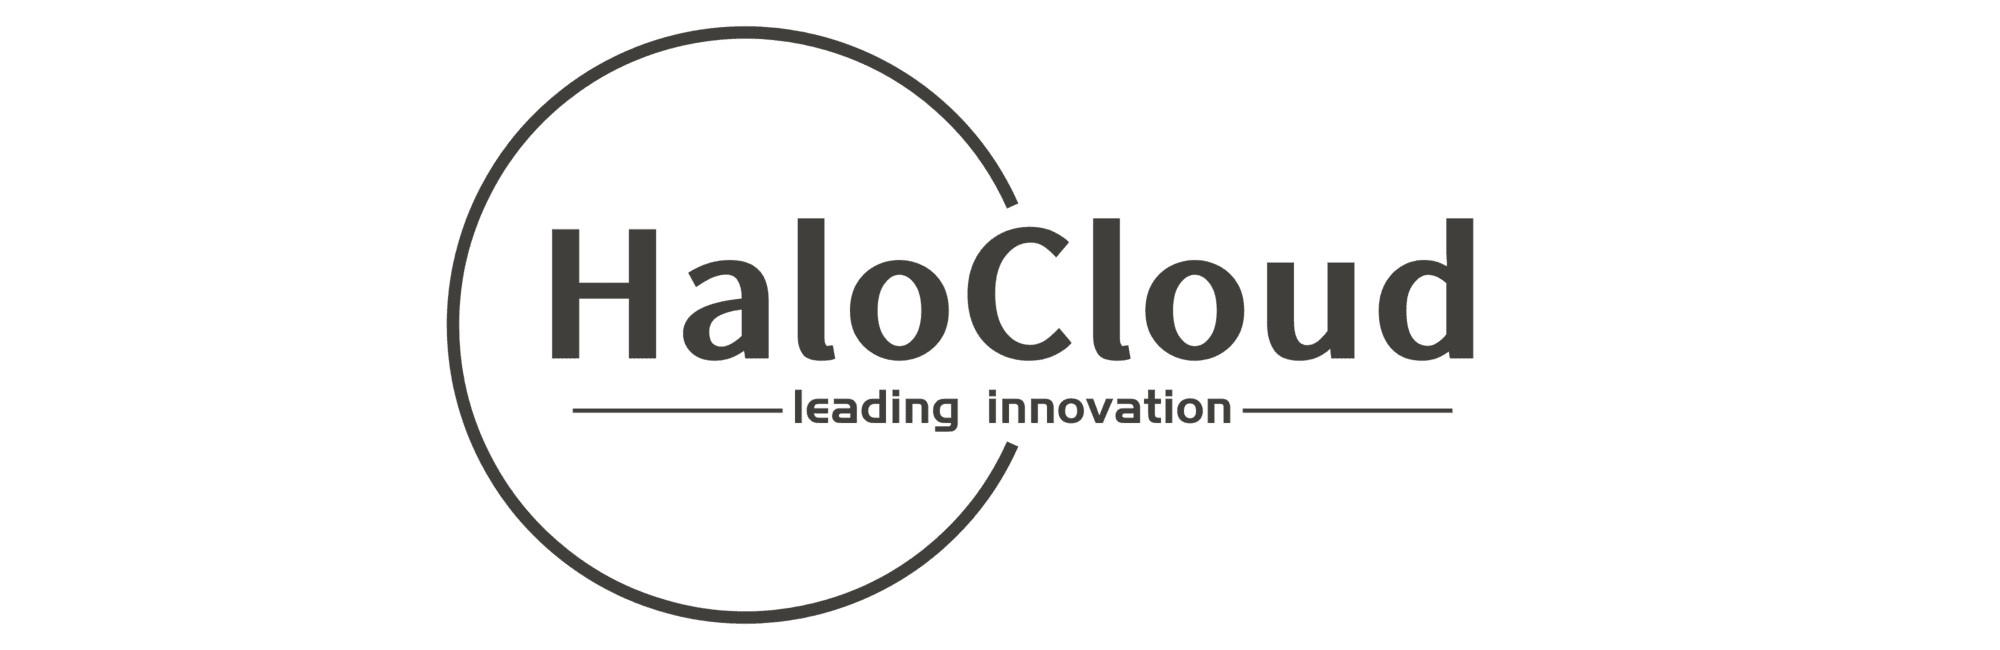 HaloCloud